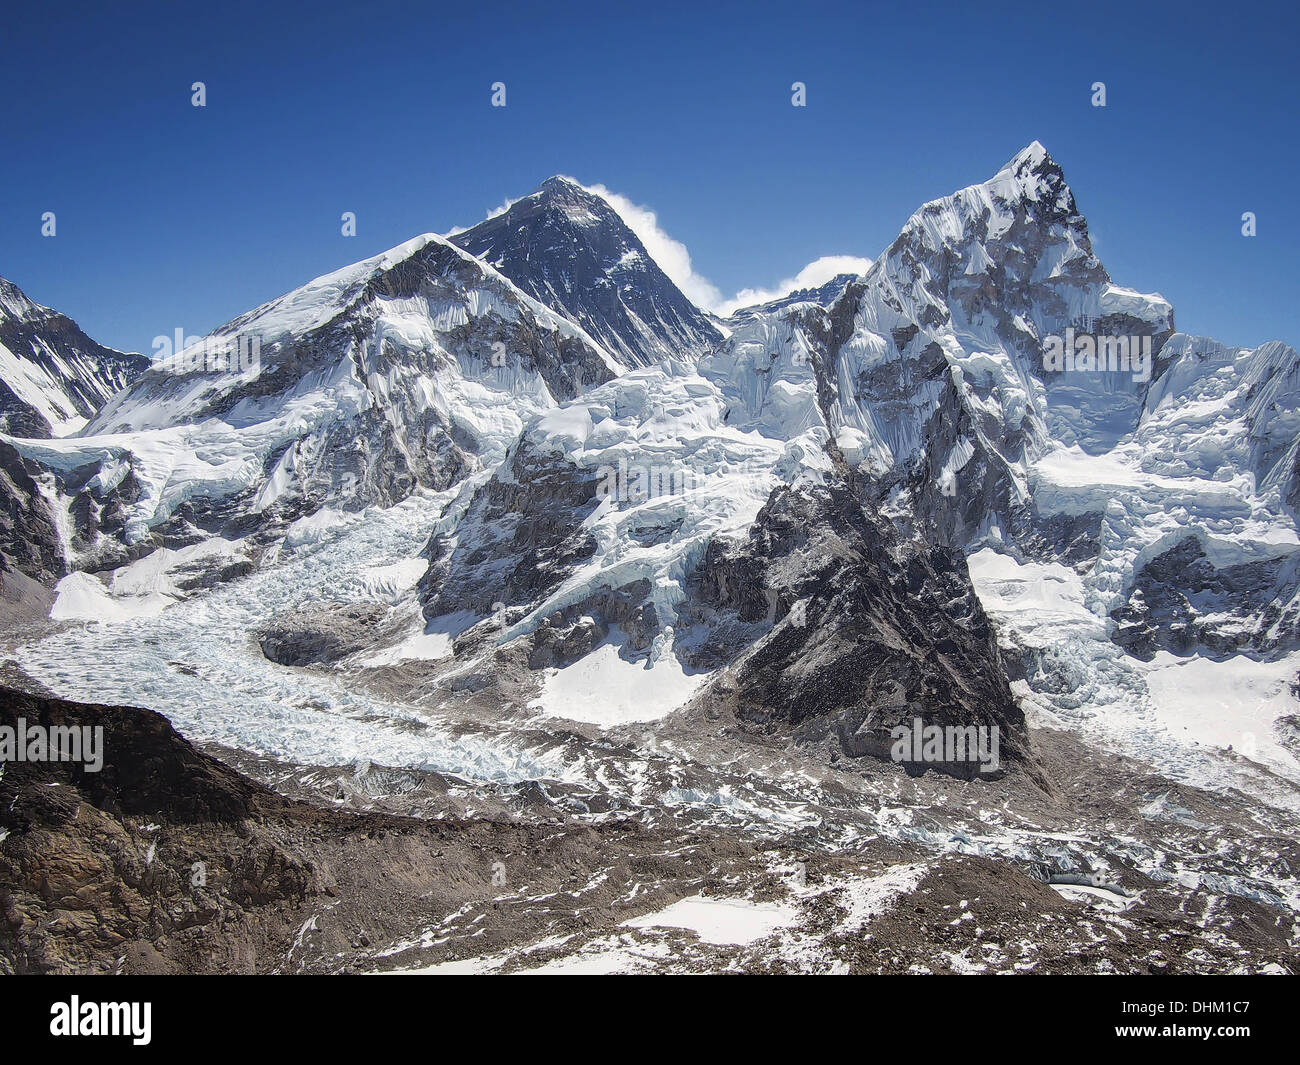 L'Everest, sul Nuptse e il Ghiacciaio Khumbu visto da Kala Patthar, Regione di Khumbu, in Nepal. Foto Stock